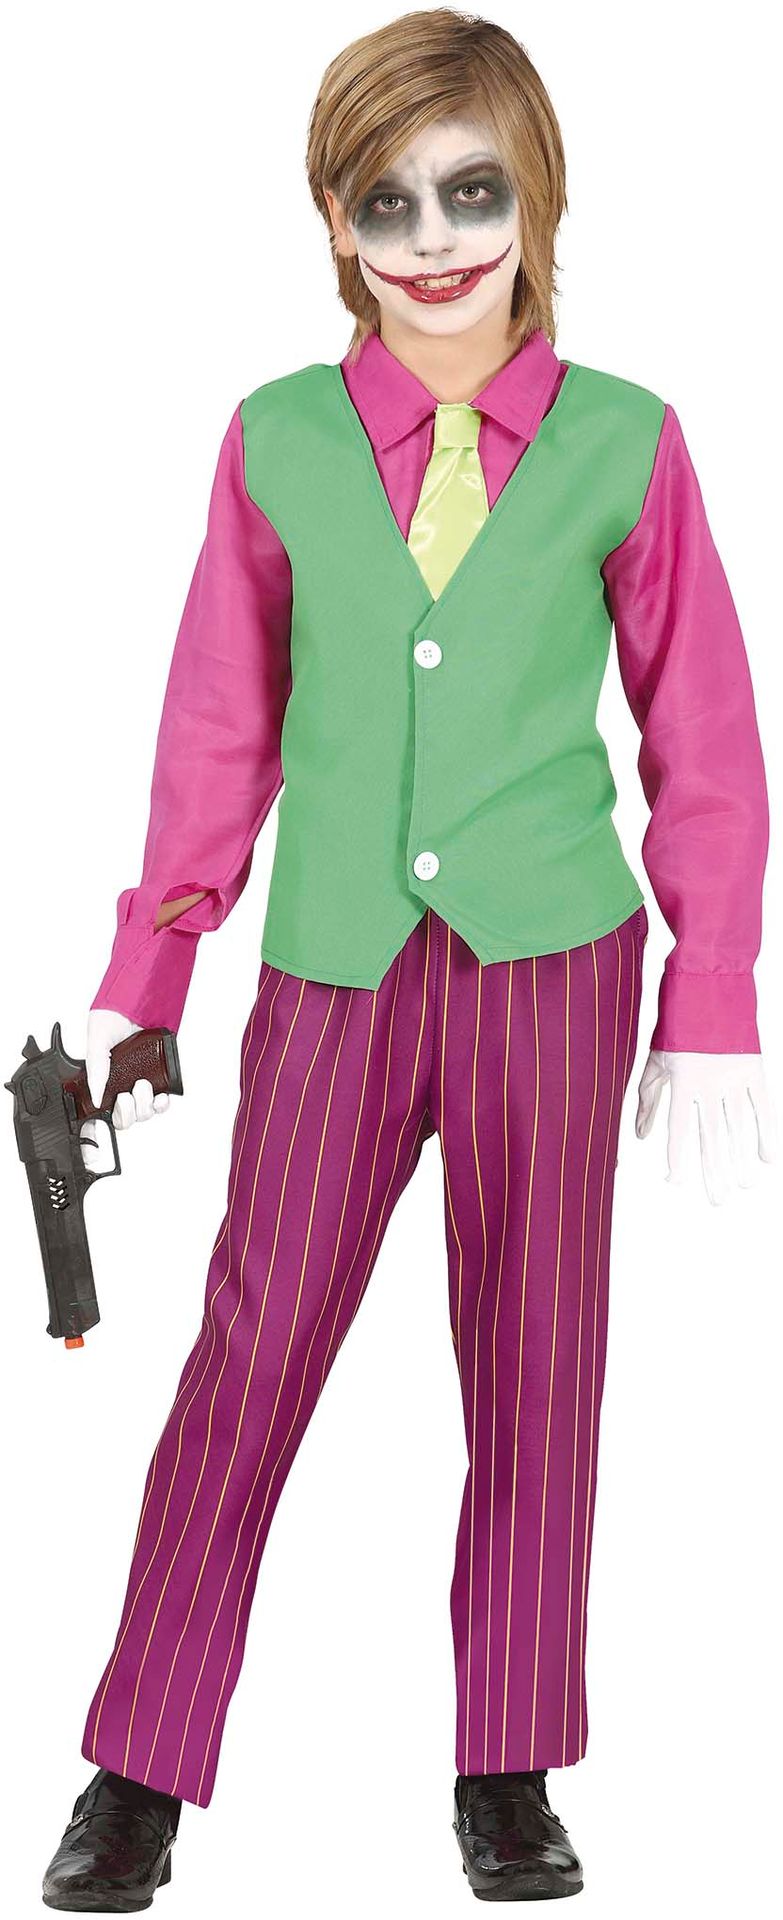 Joker outfit kind